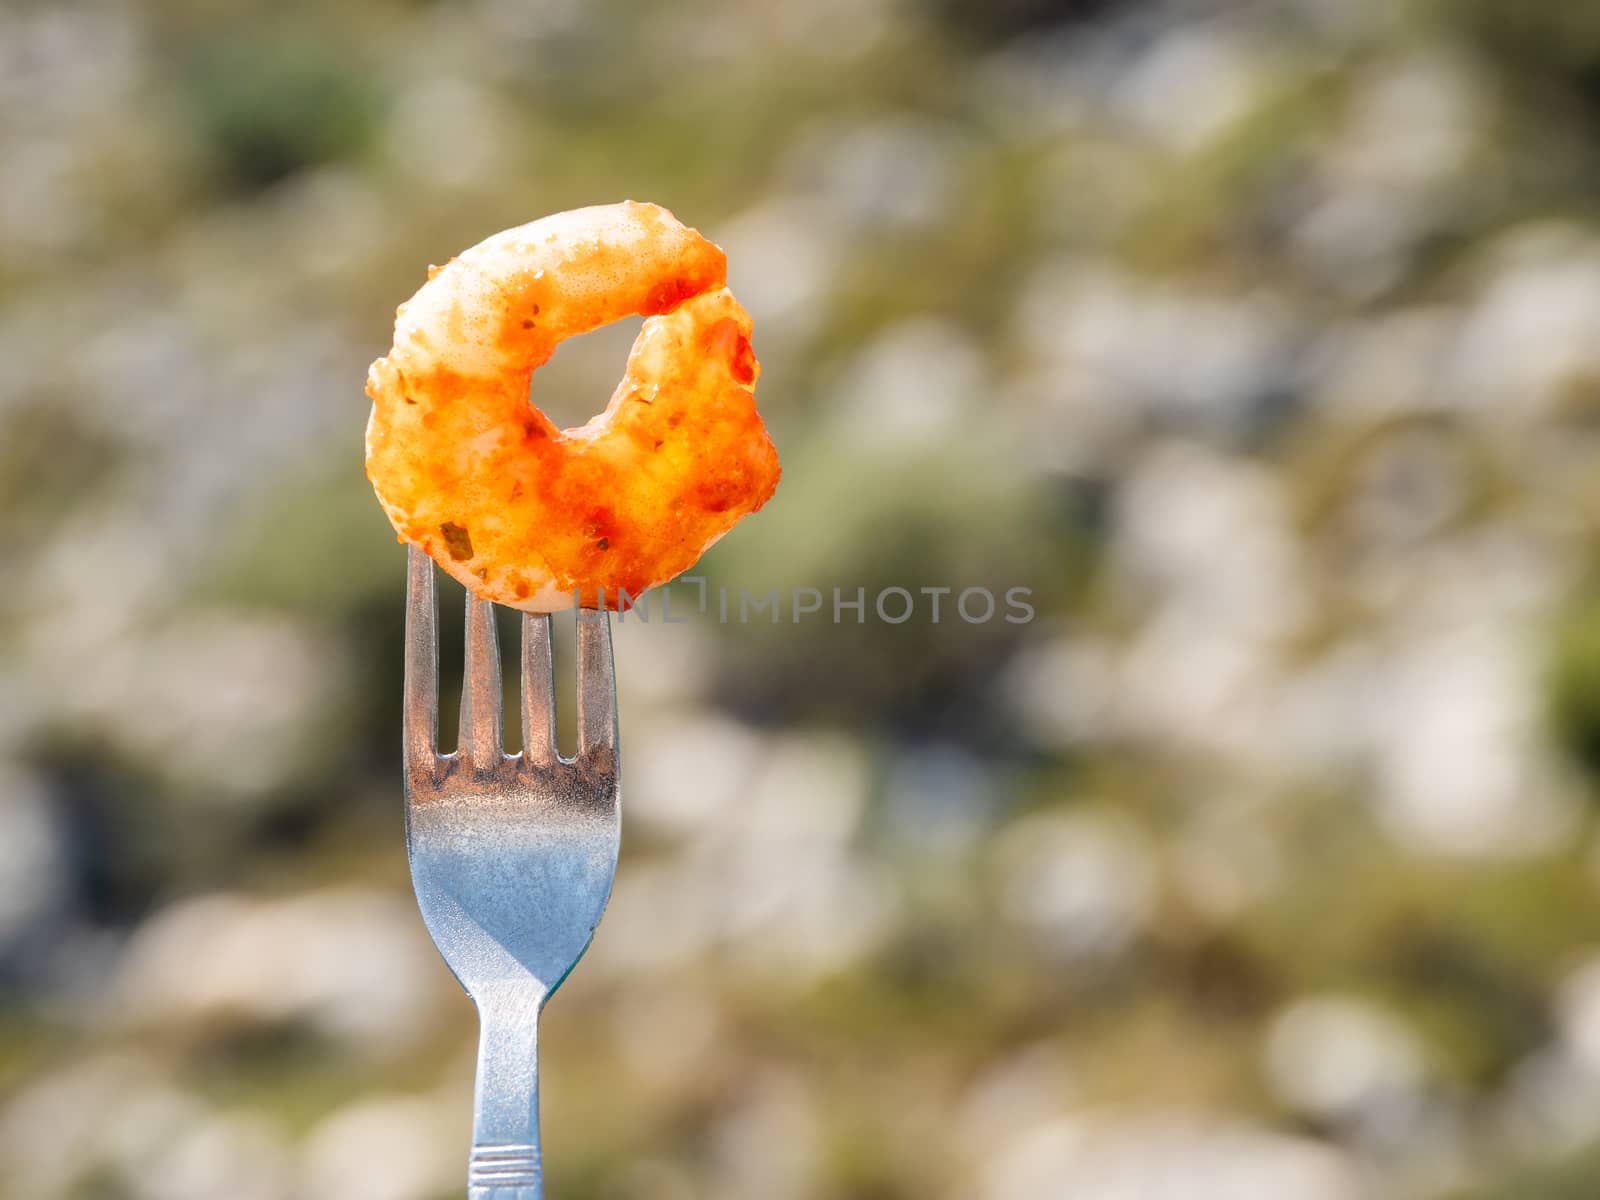 Mediterranean cuisine - freshly roasted shrimp on fork. Seafood on green foliage background. Outdoor picnic.